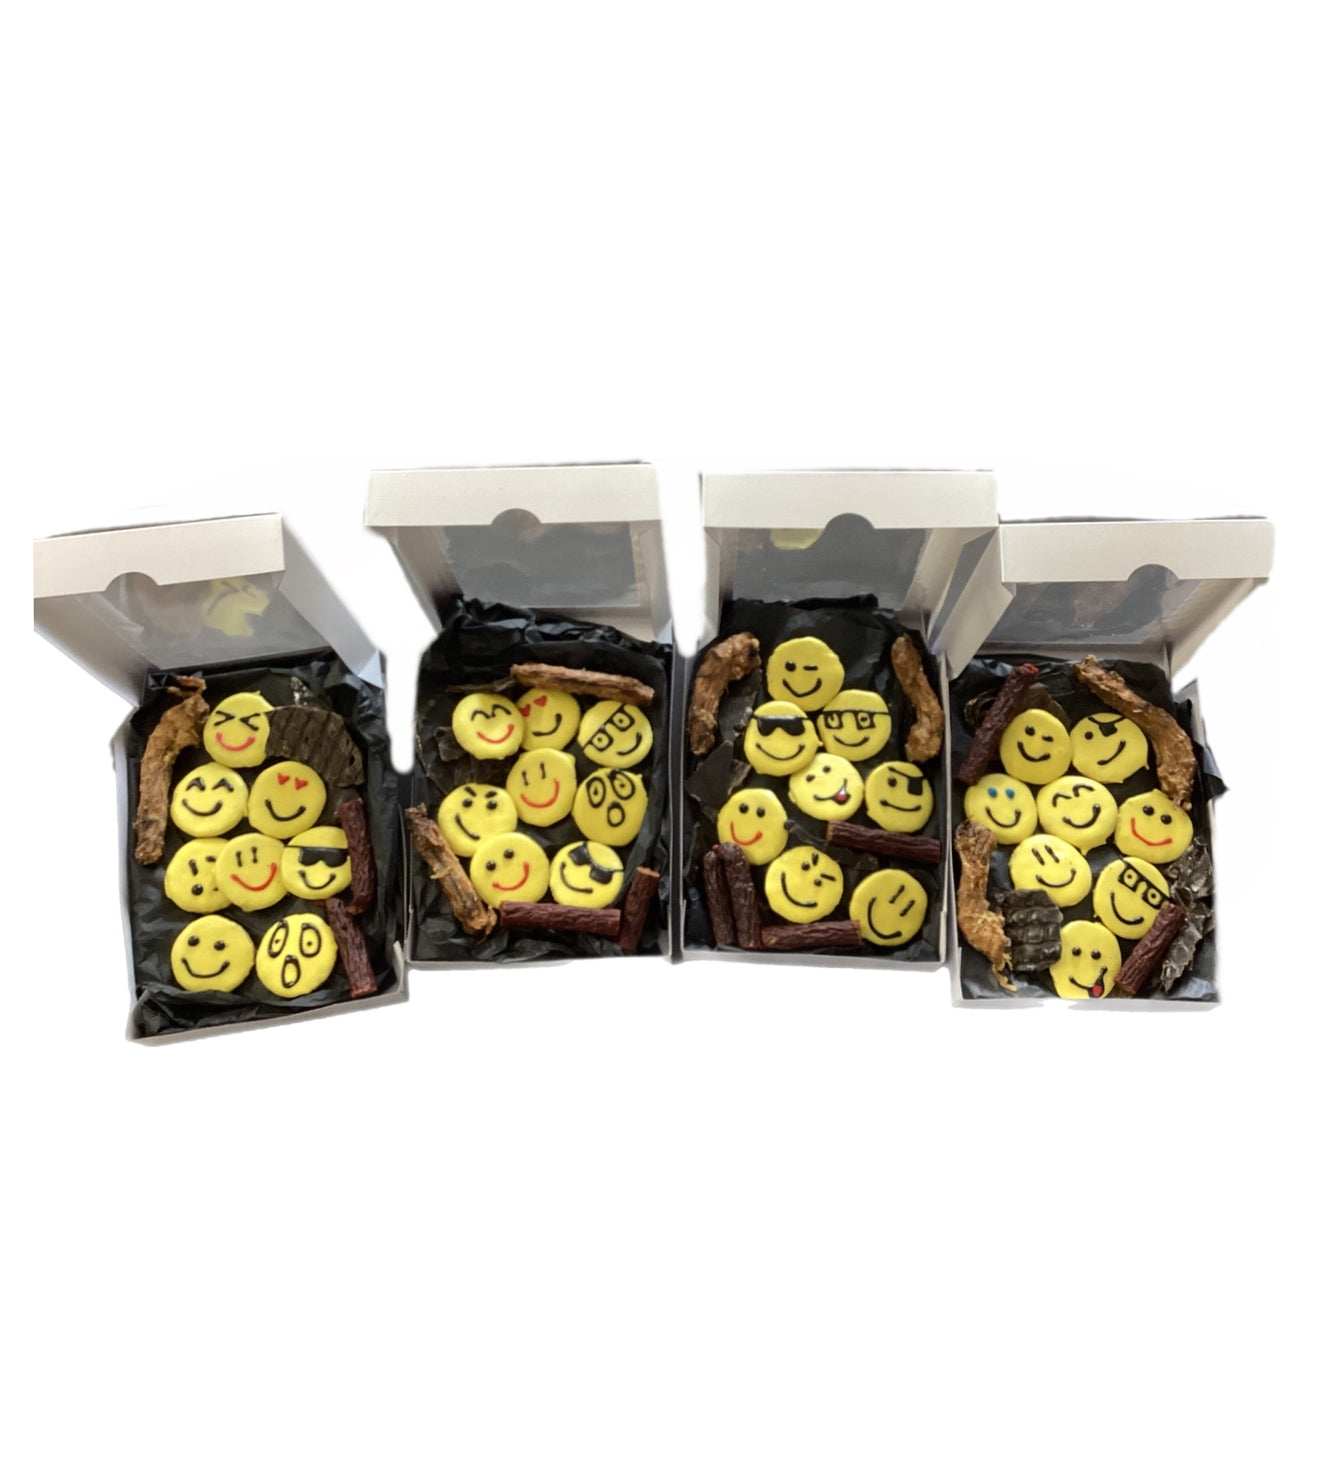 Emoji fun boxed cookies yoghurt treats gift pack sugar free